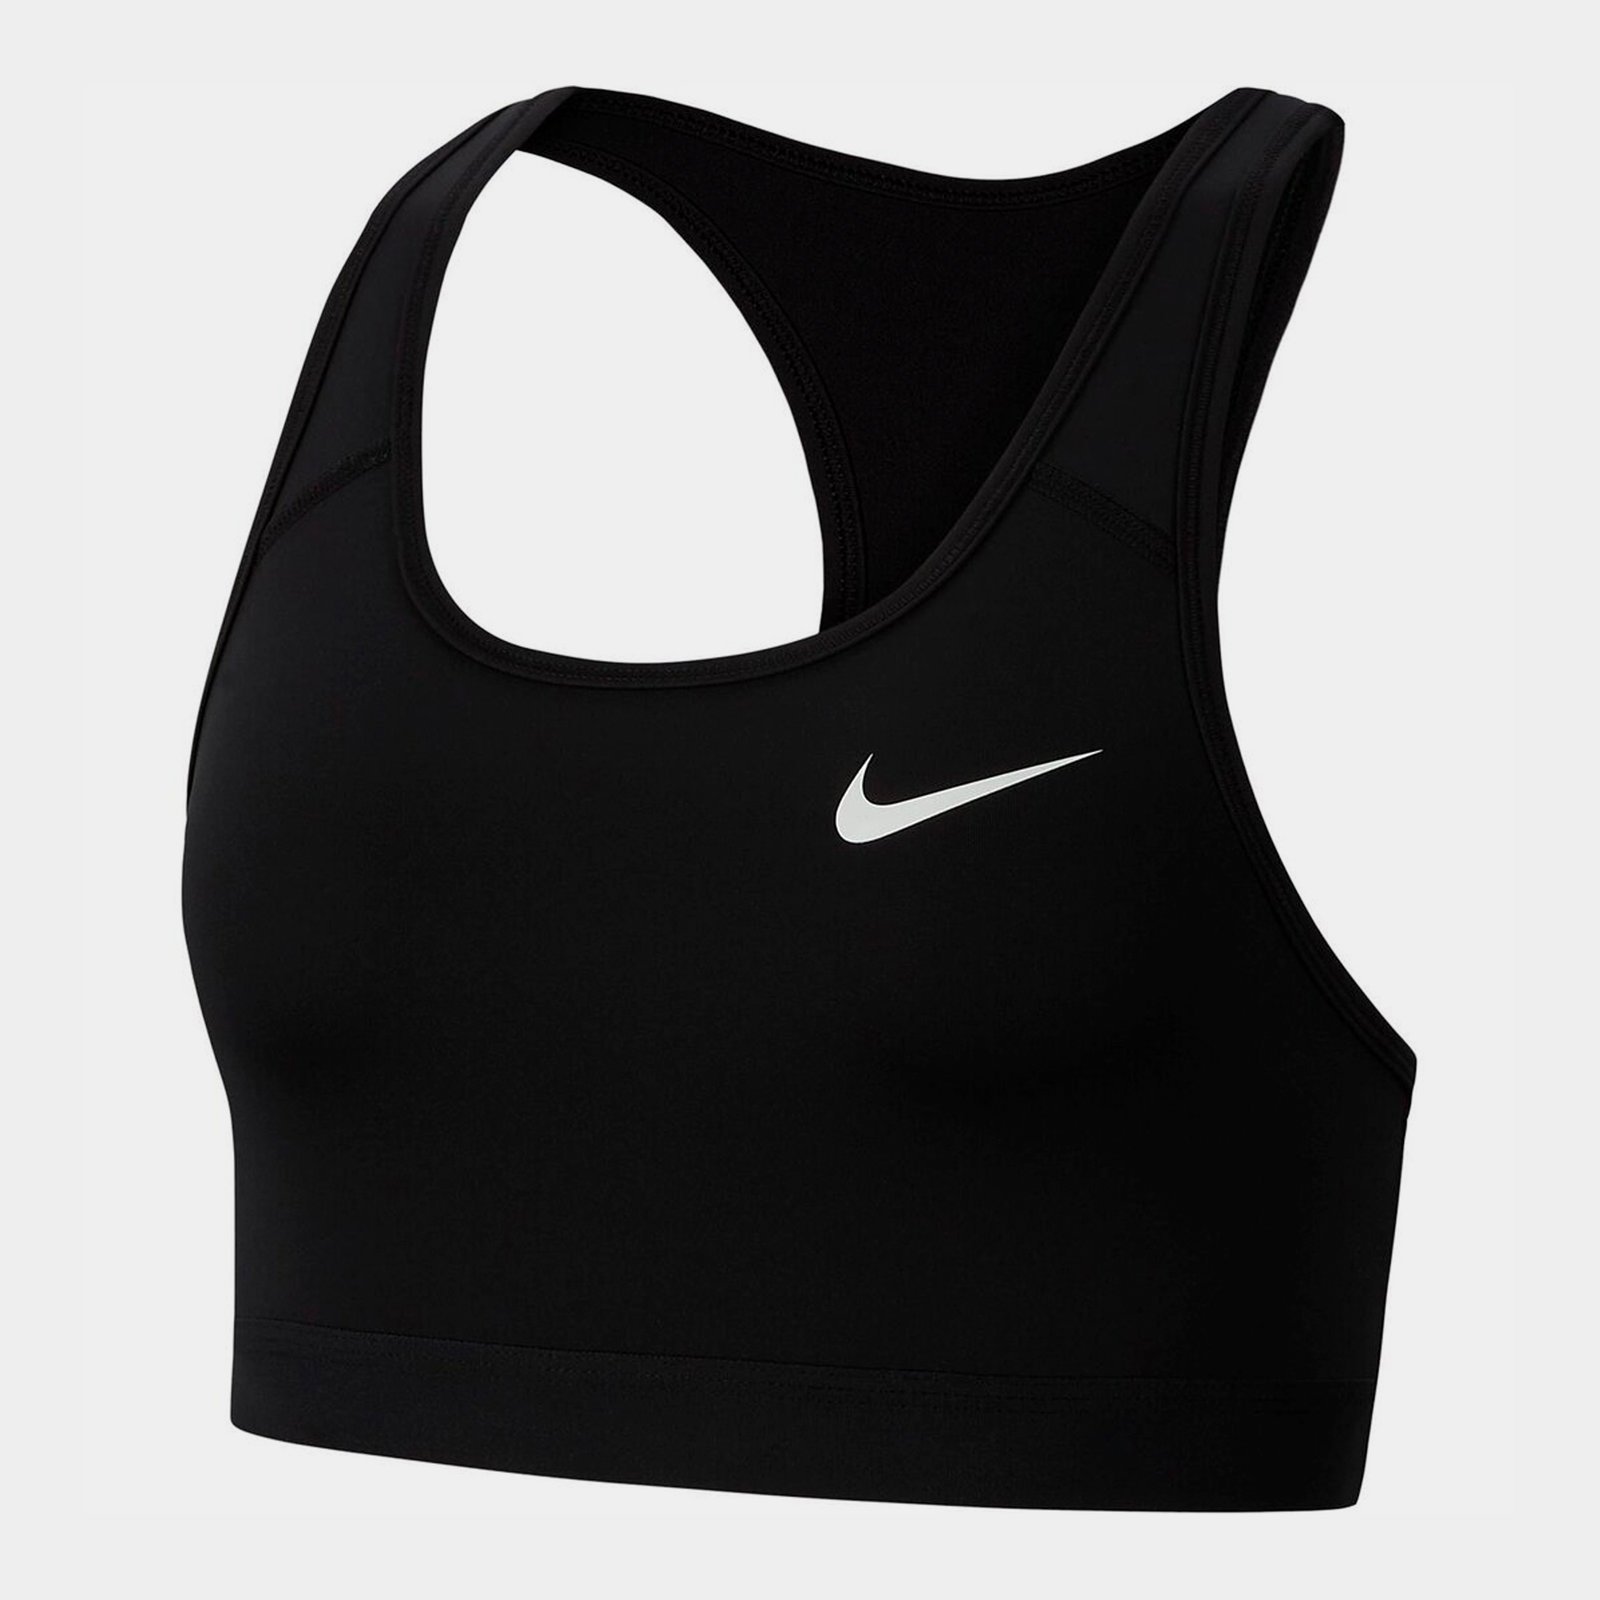 Nike, Indy Logo Bra Ld99, Black/White